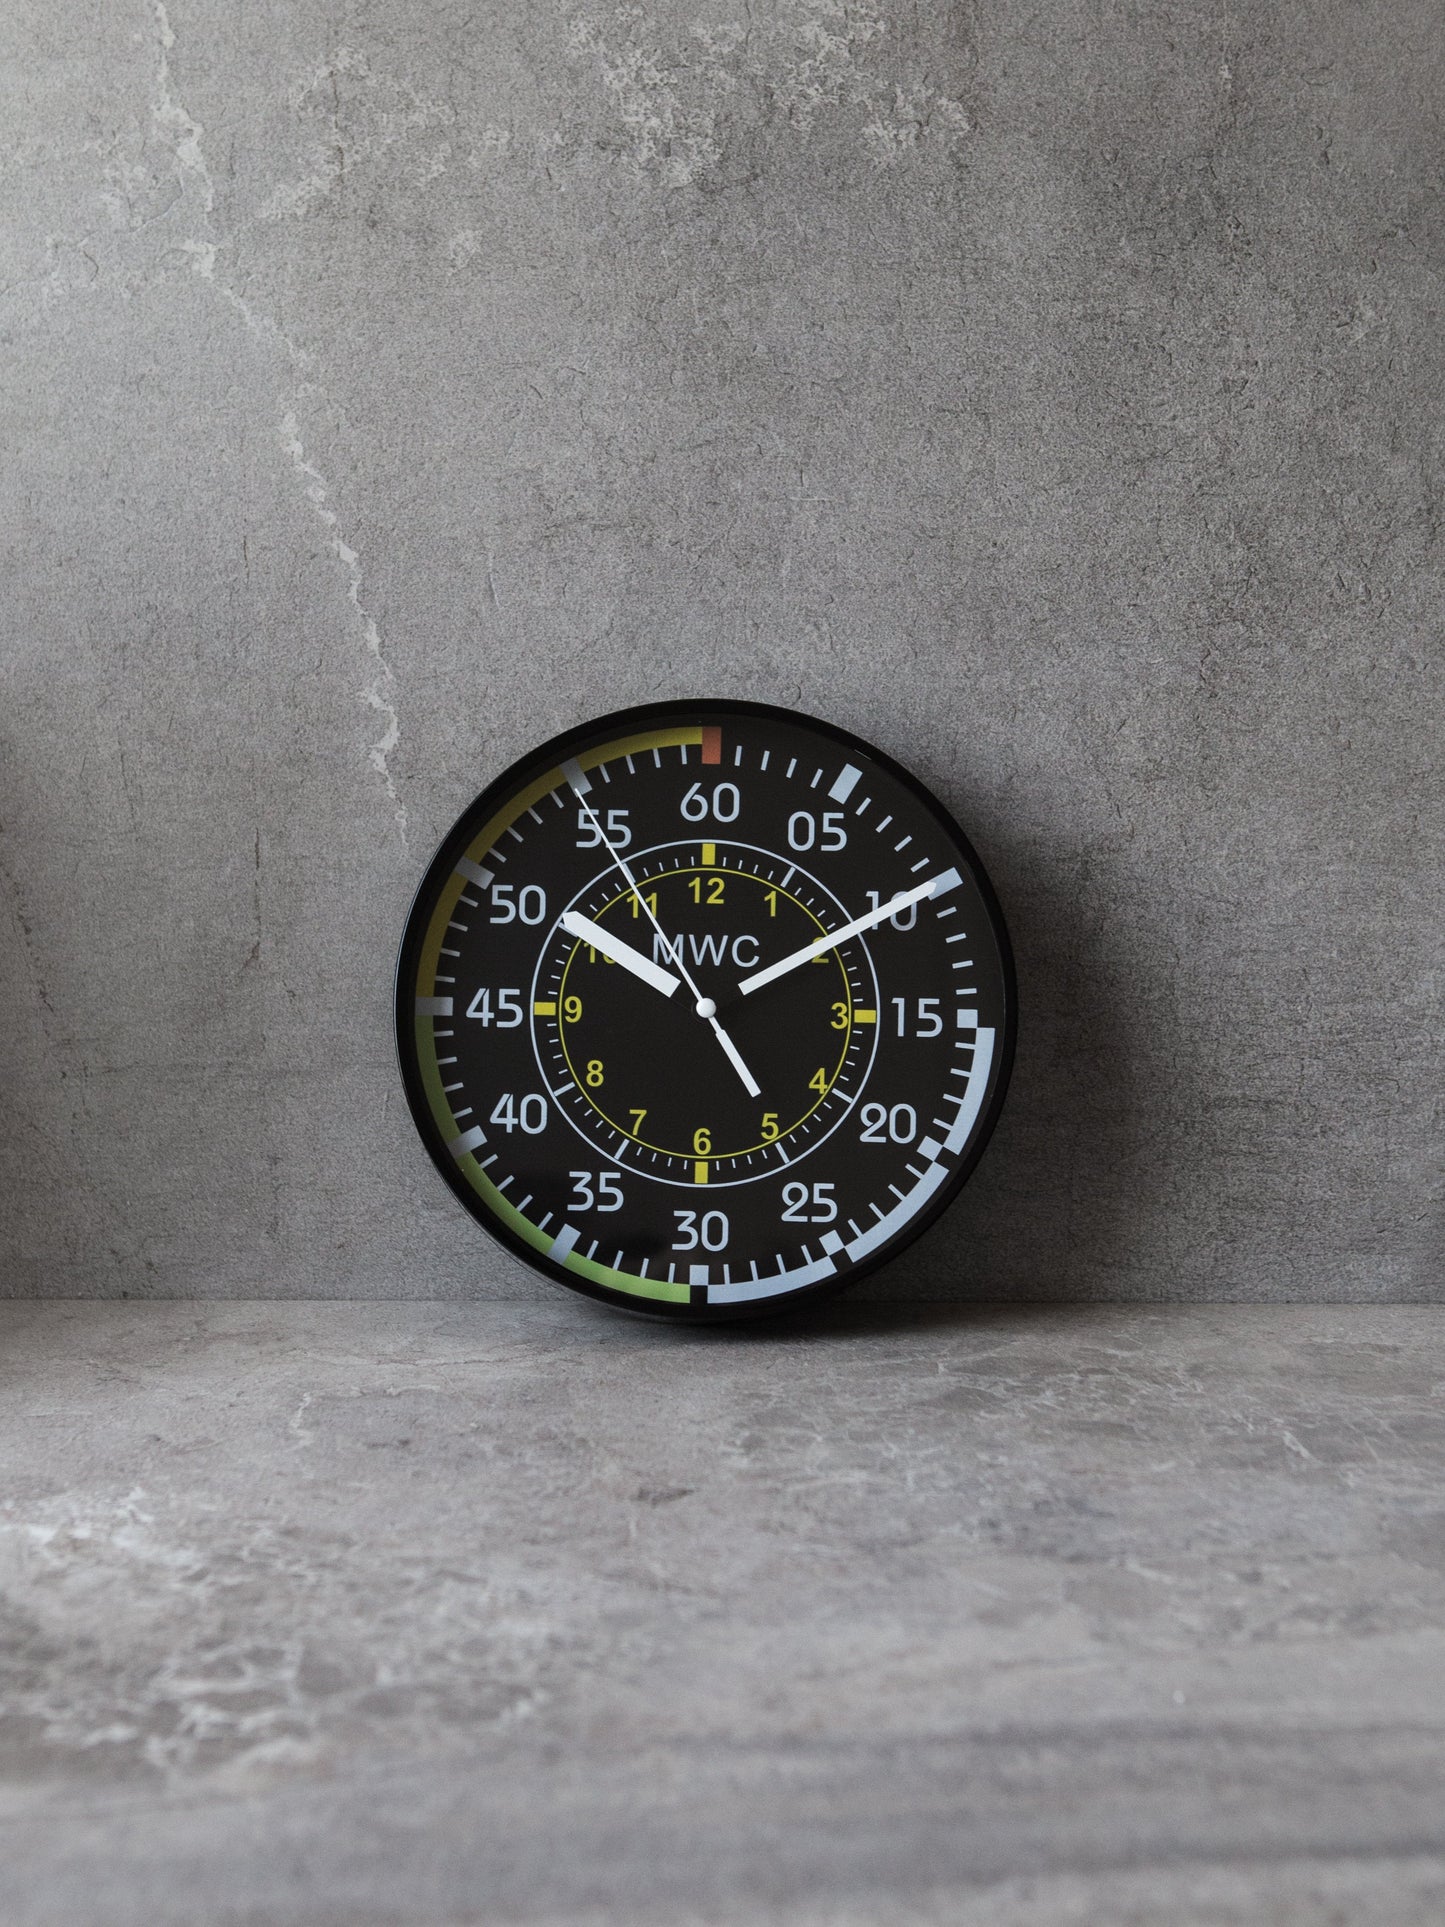 MWC Aircraft Instrument Airspeed Indicator Wall Clock